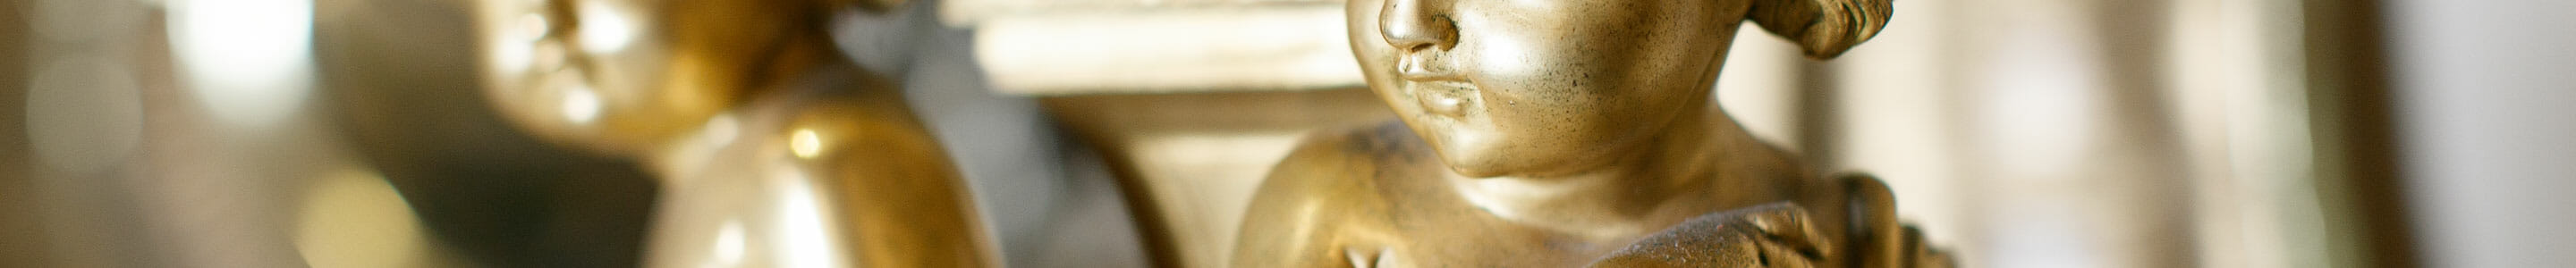 Close-up of cherub statue